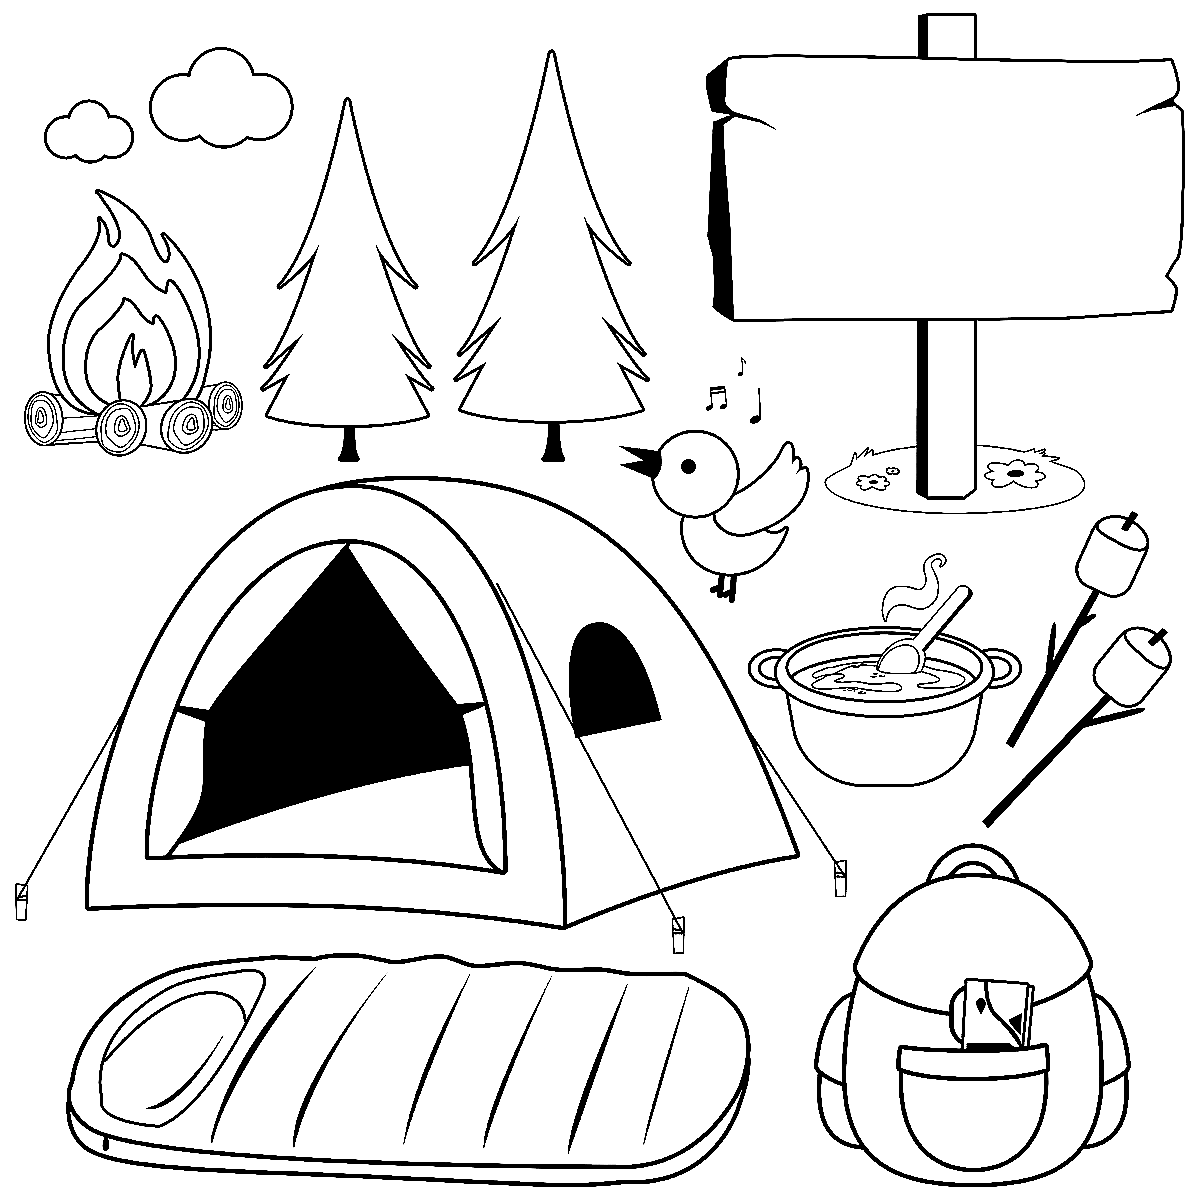 Camping familial depuis Camping